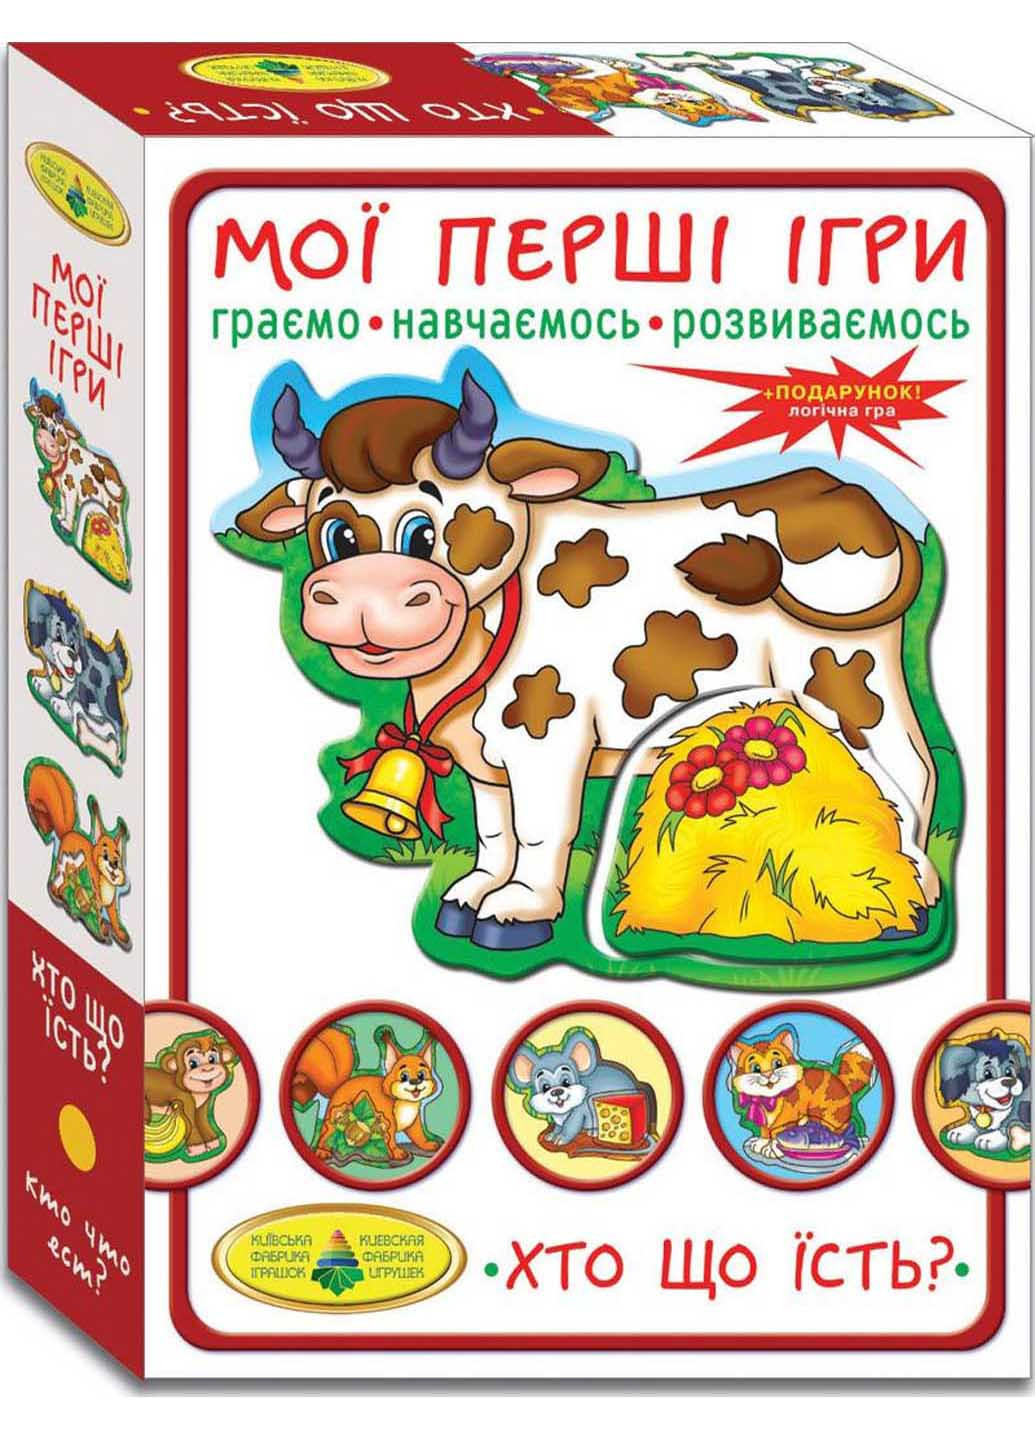 Гра Мої перші ігри Хто що їсть? Киевская фабрика игрушек (260268621)